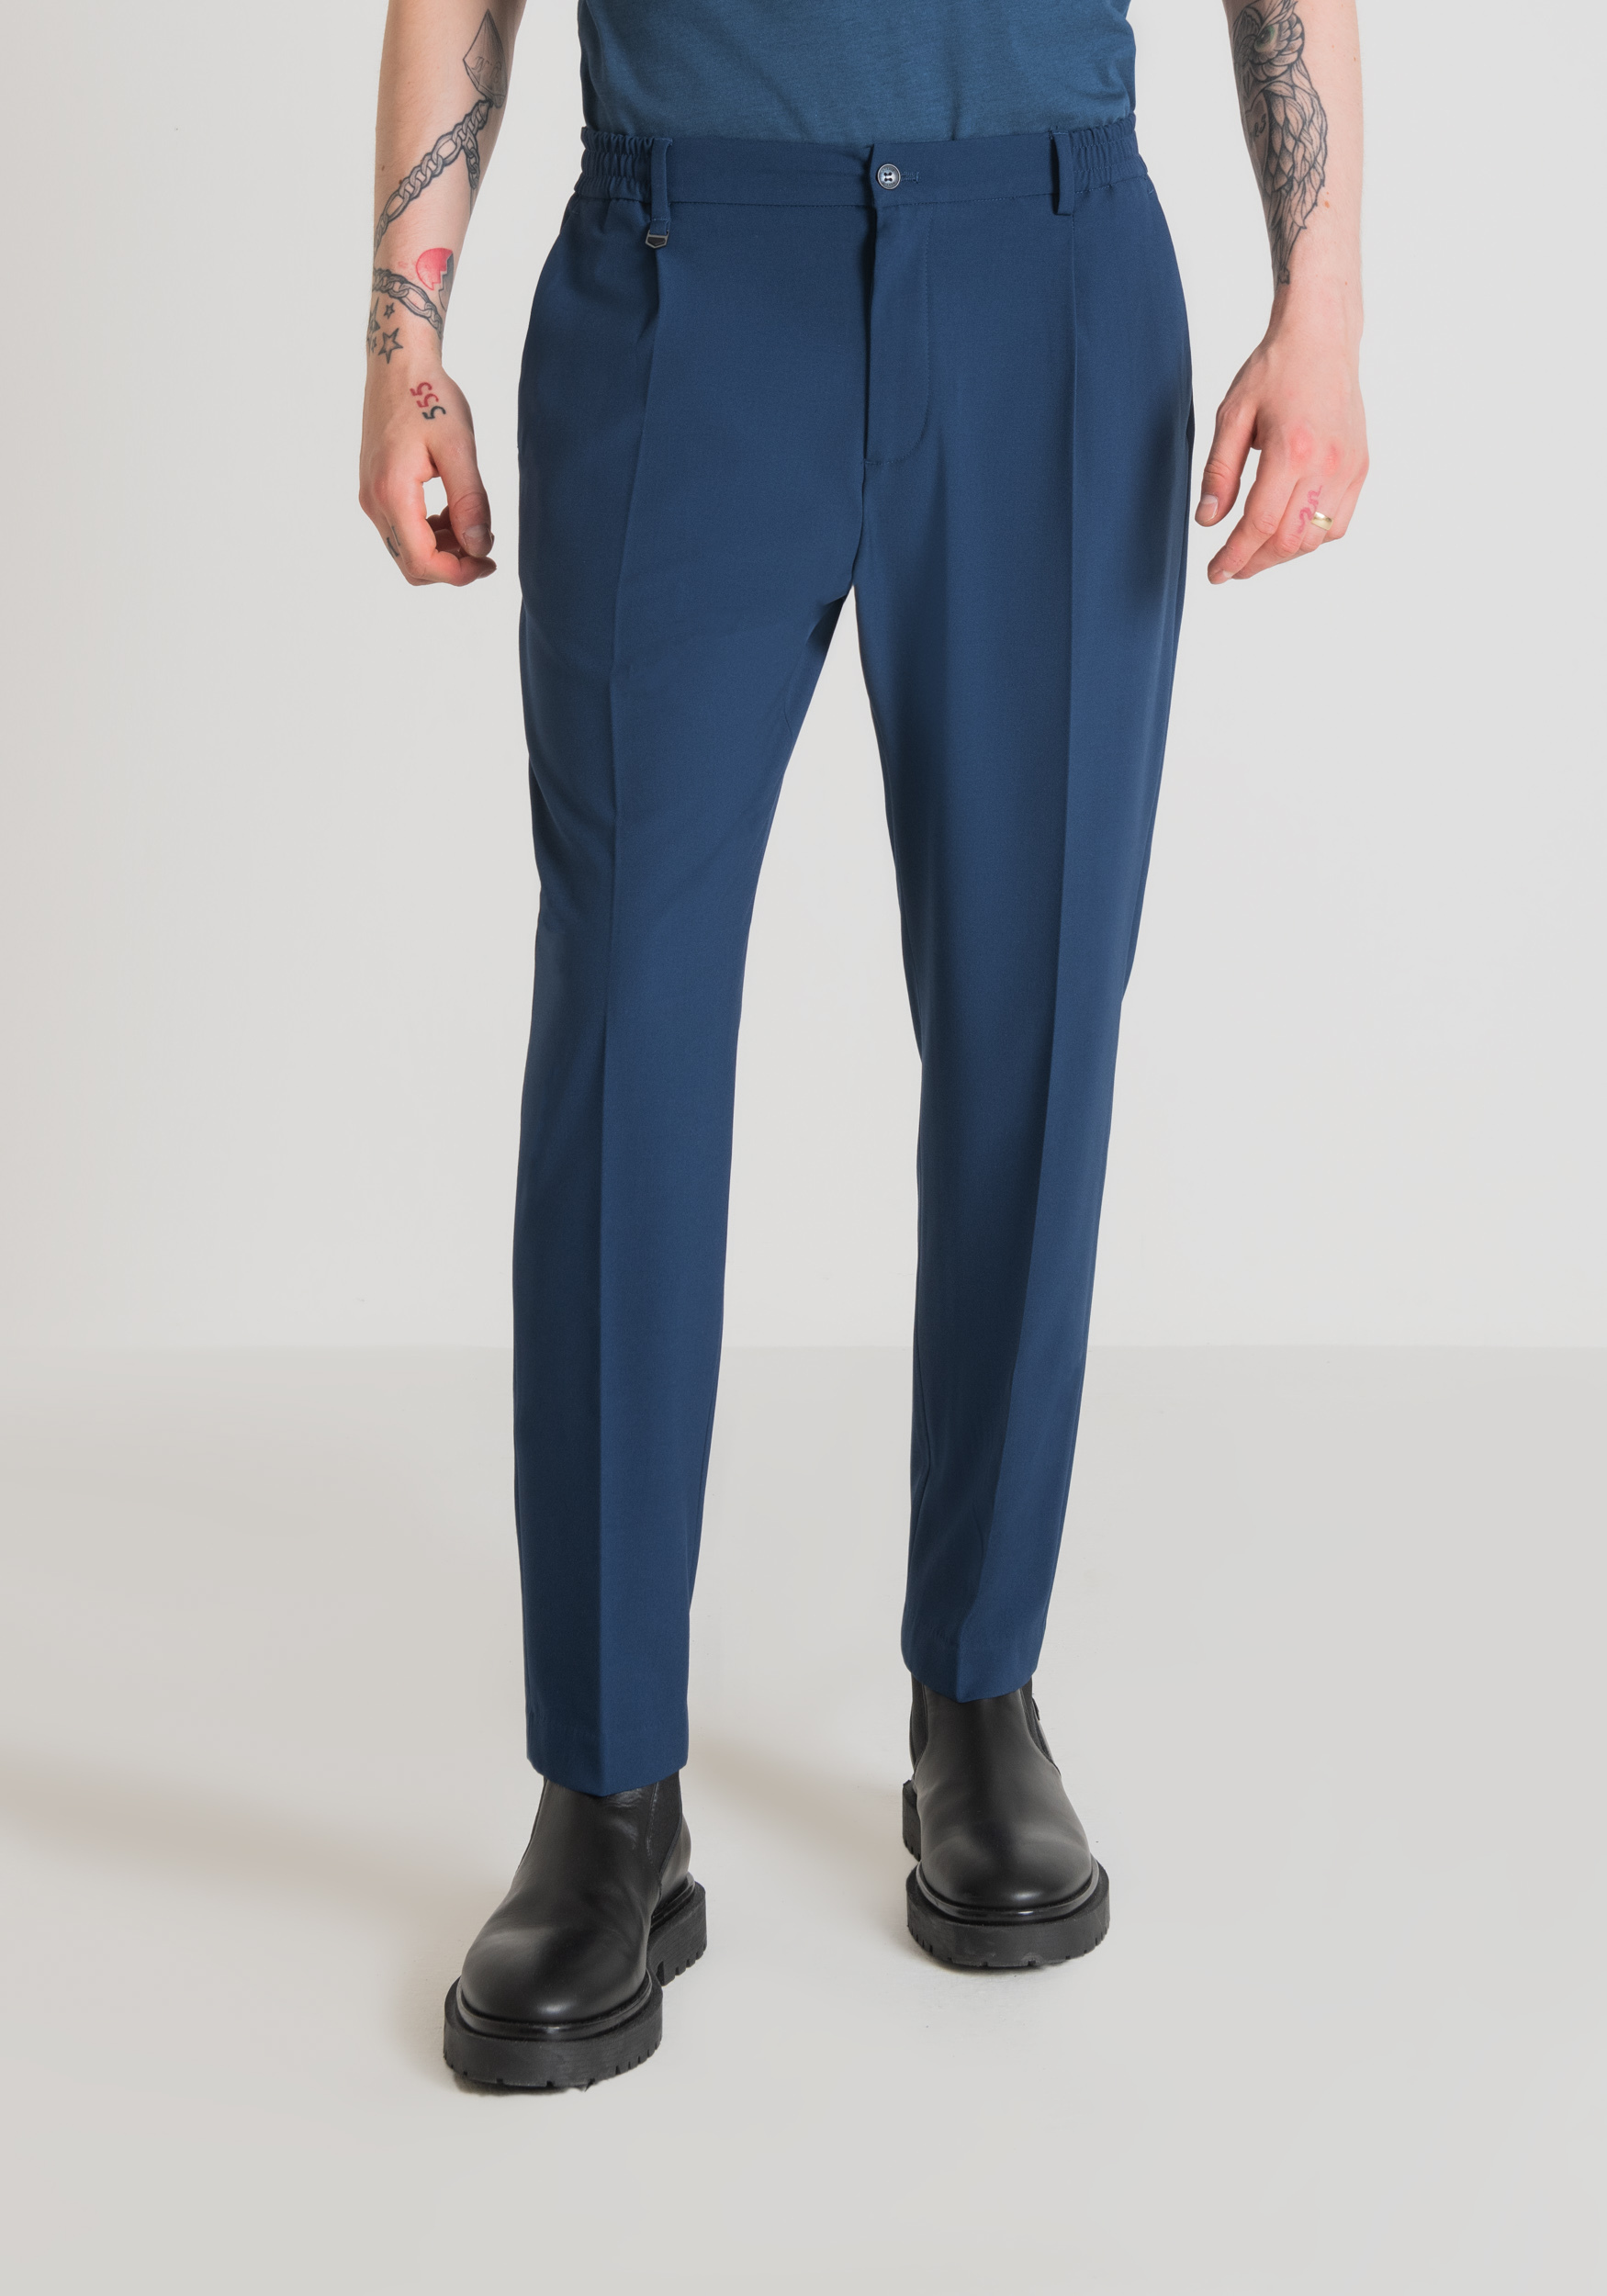 Antony Morato Pantalon Regular Fit Cora En Tissu De Viscose Melangee Elastique Avio | Homme Pantalons